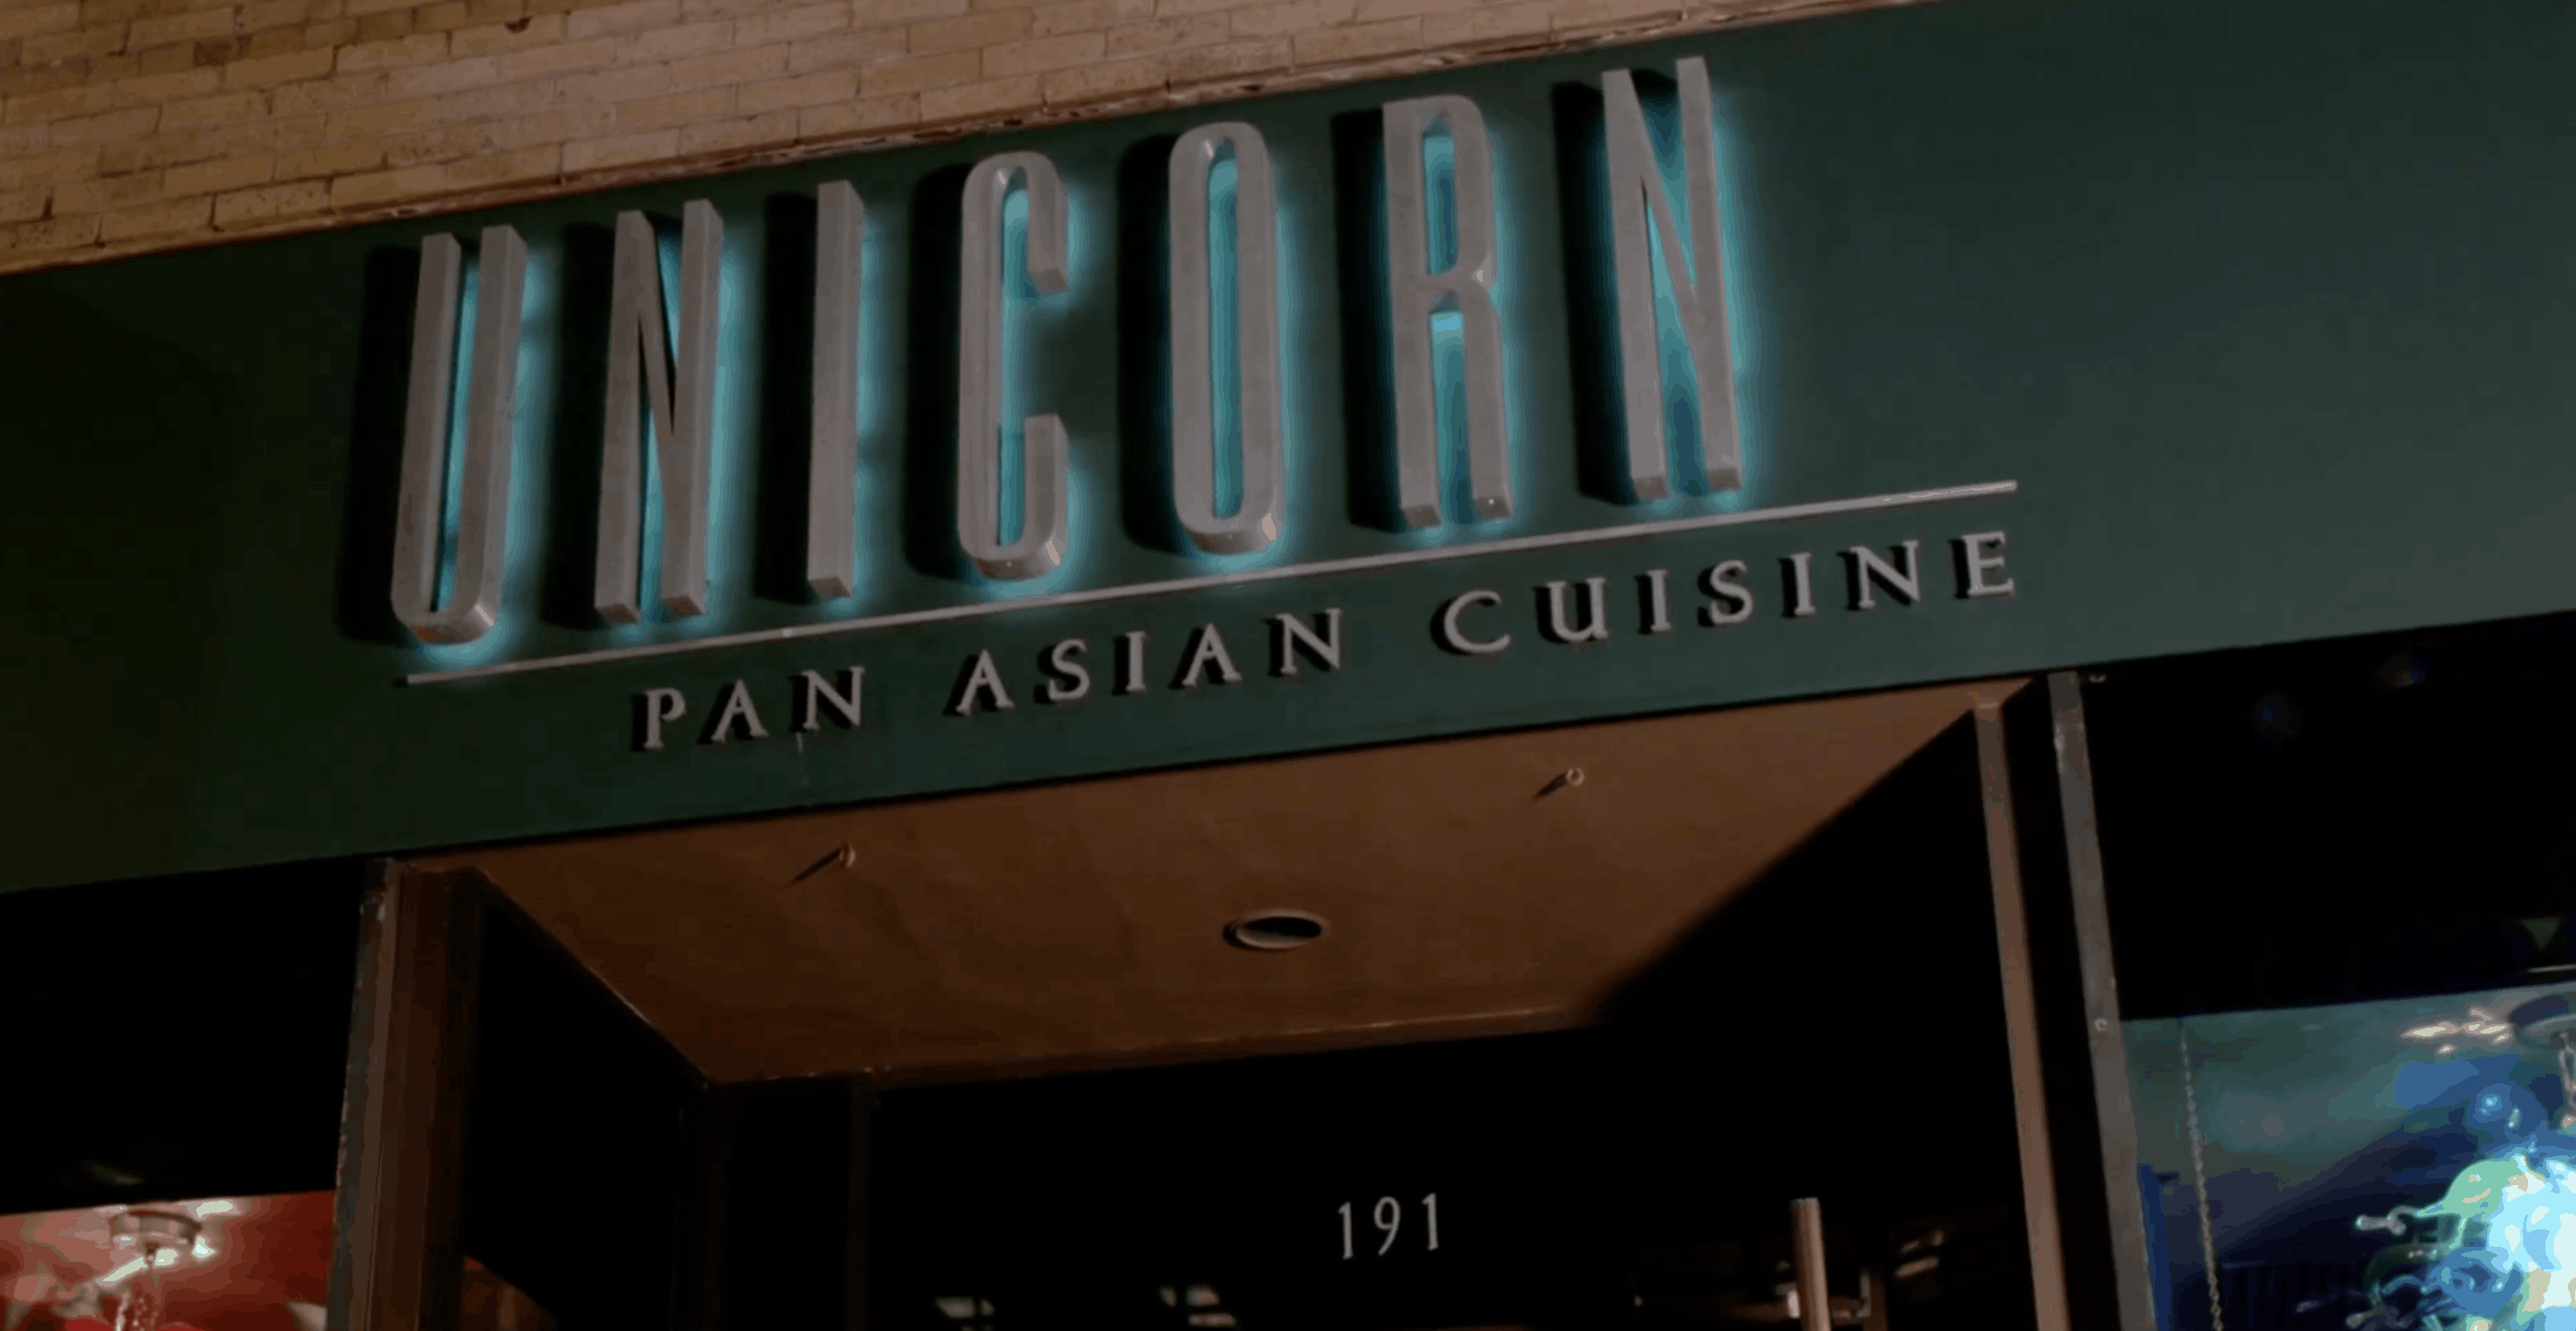 Unicorn Pan Asian Cuisine